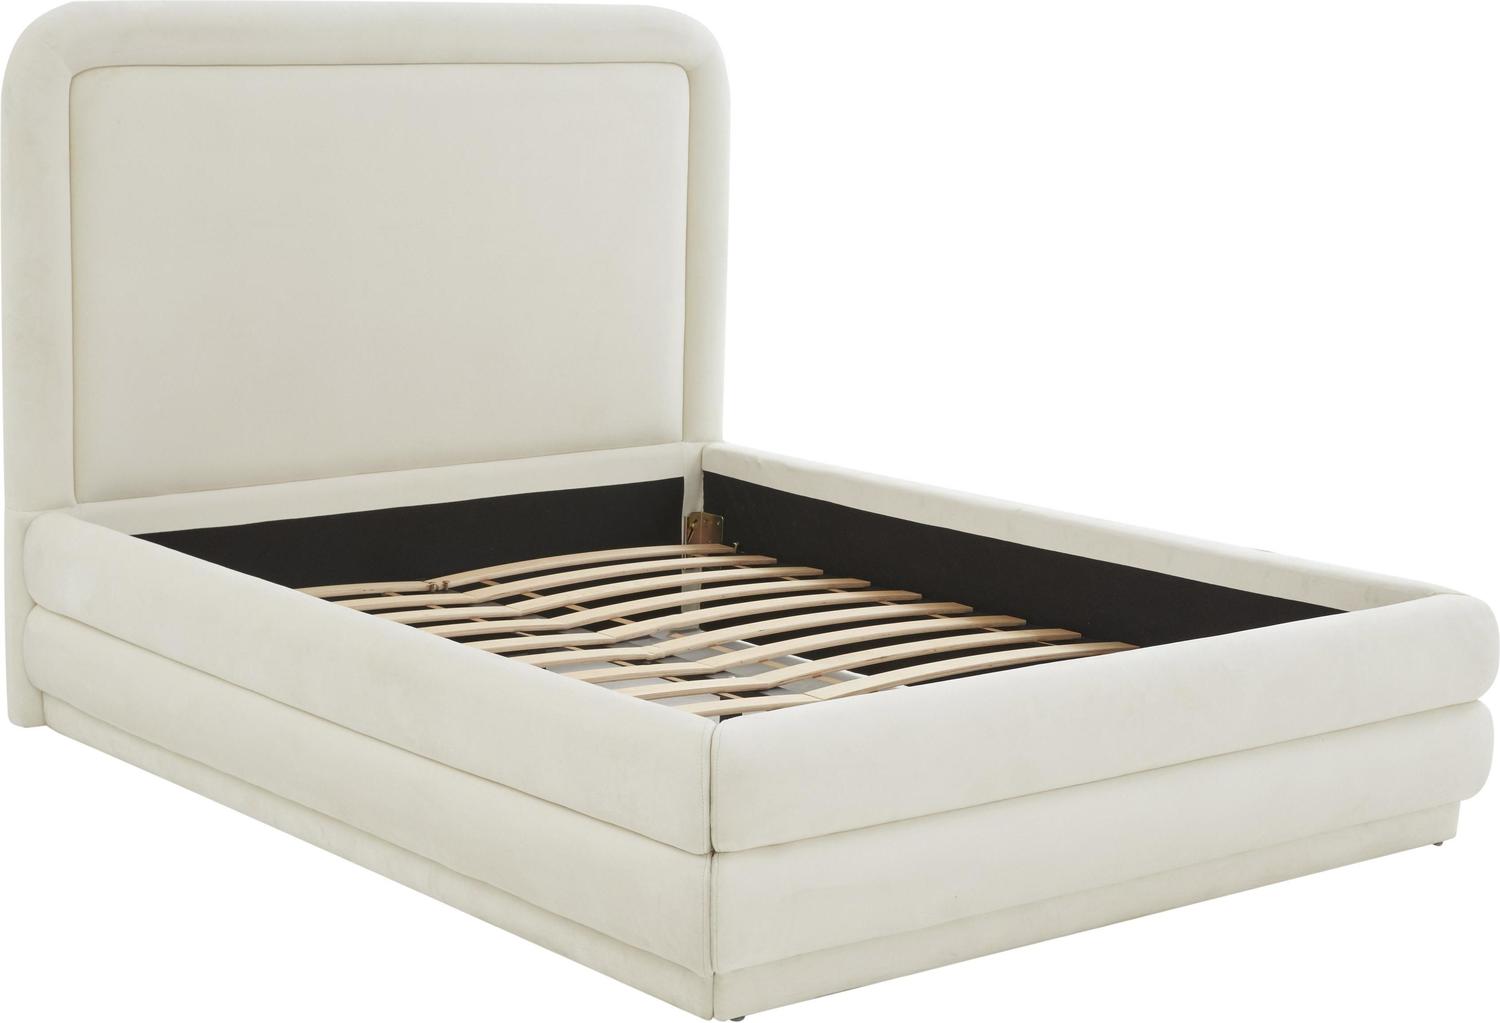 twin cot frame Tov Furniture Beds Cream